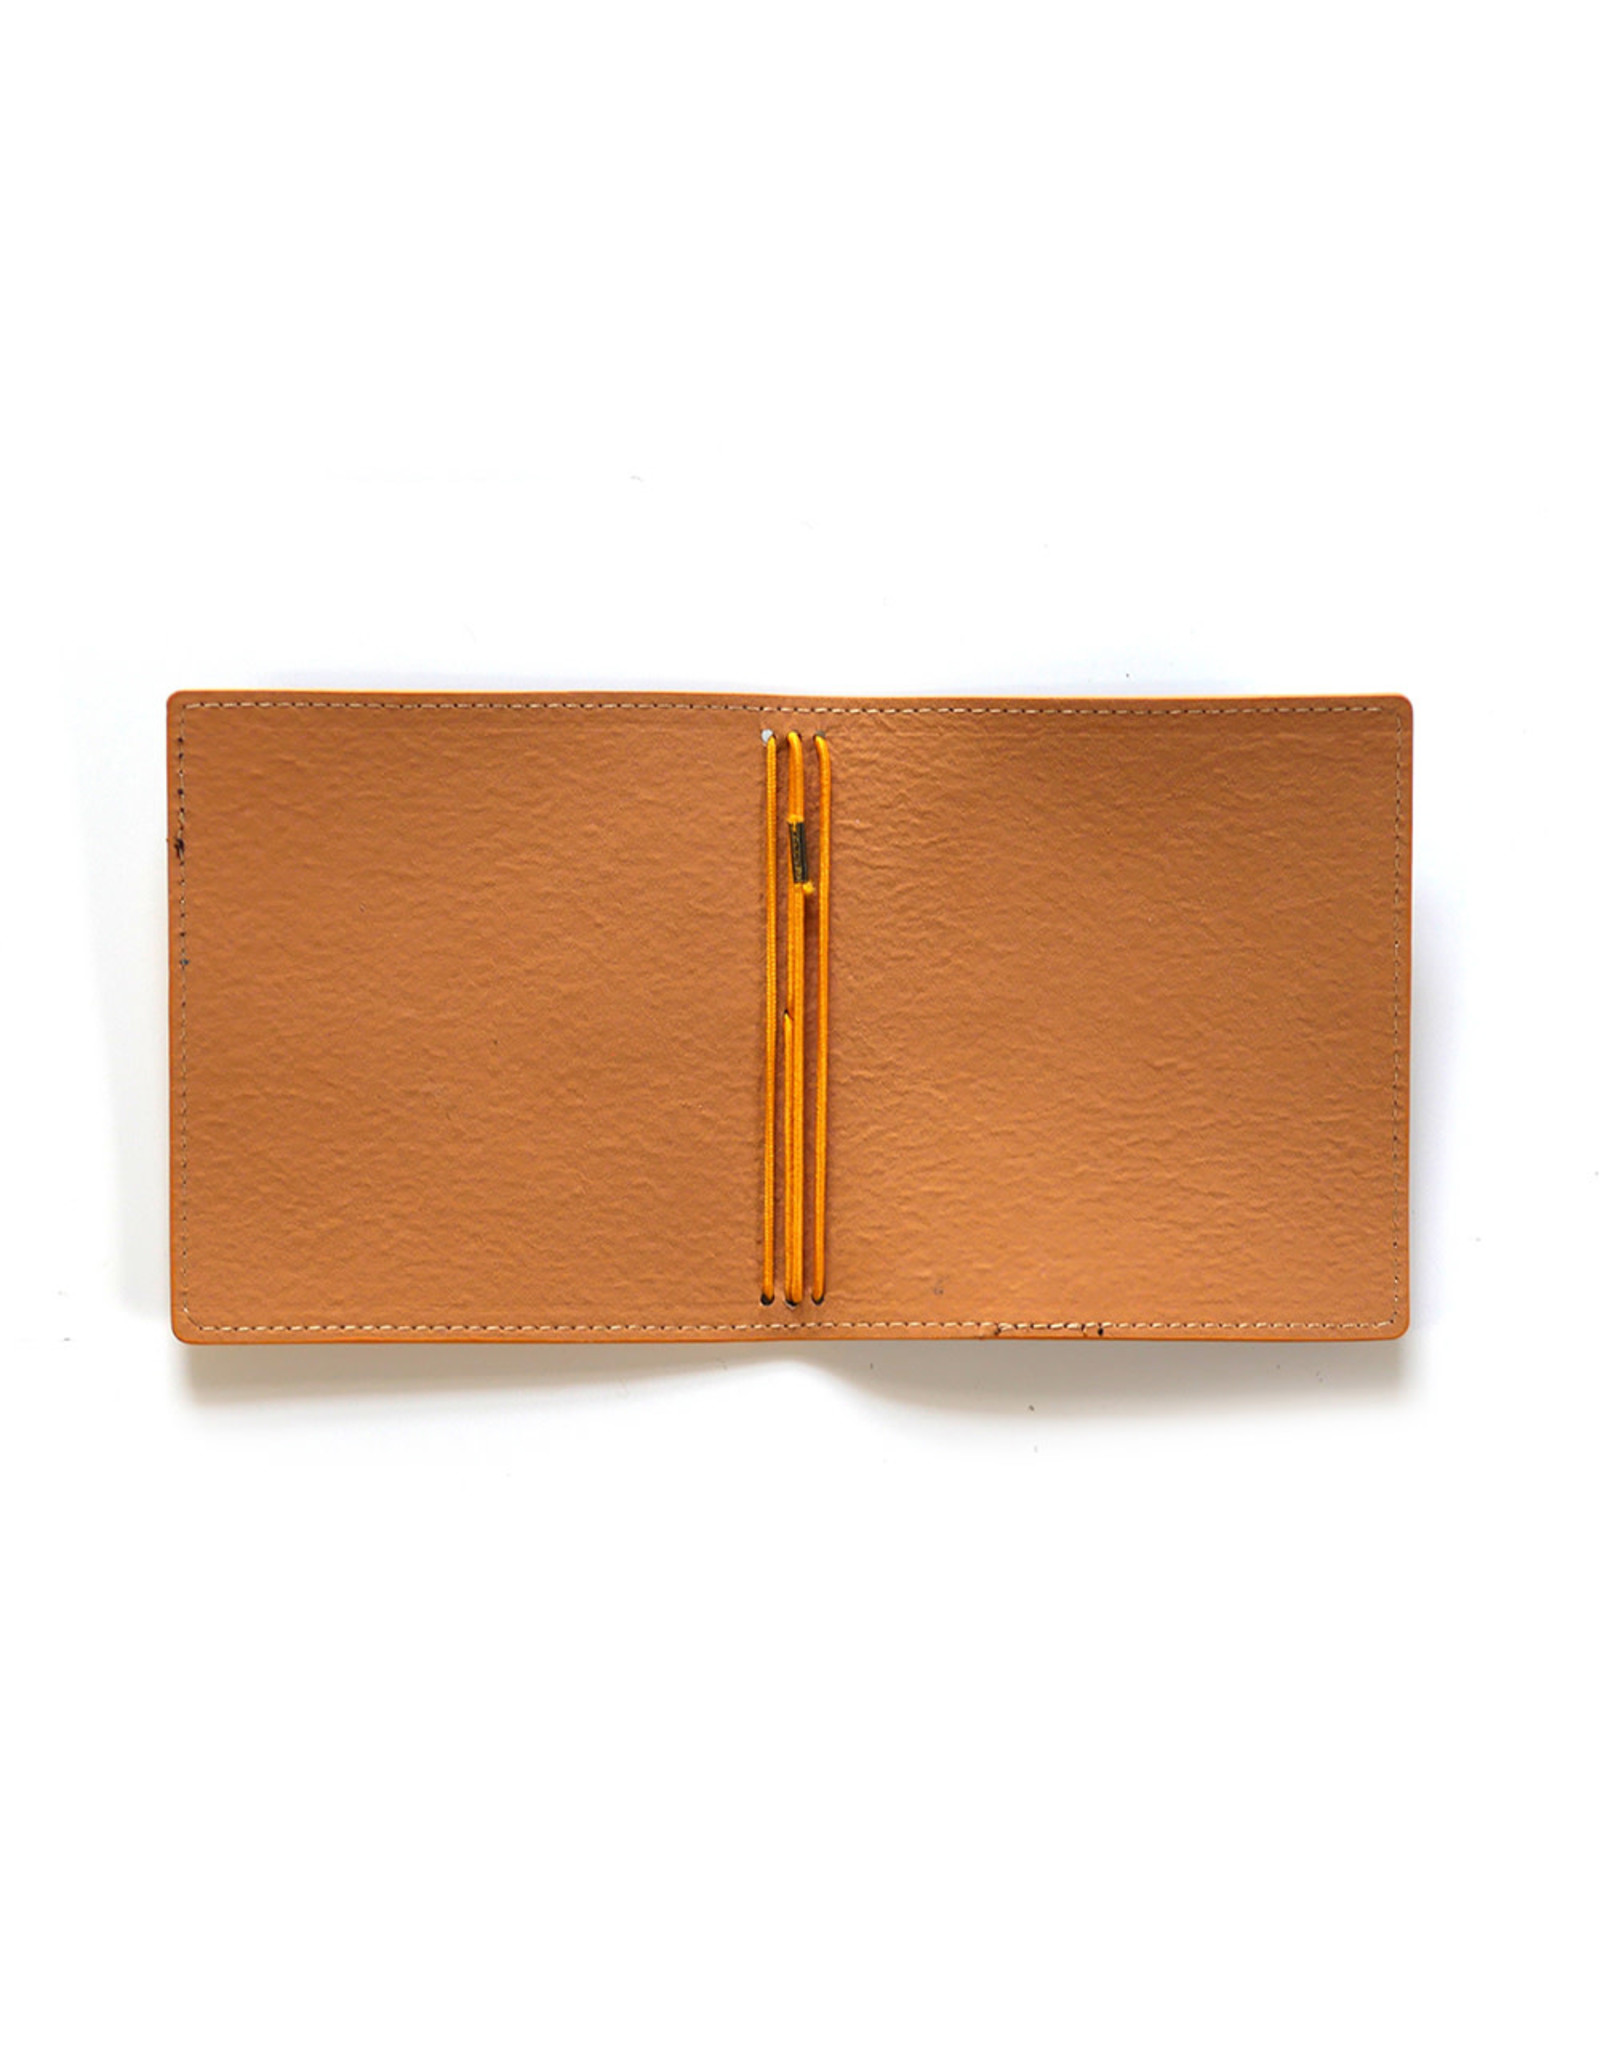 Elizabeth Craft Designs Traveler's Notebook Square - Espresso Ochre